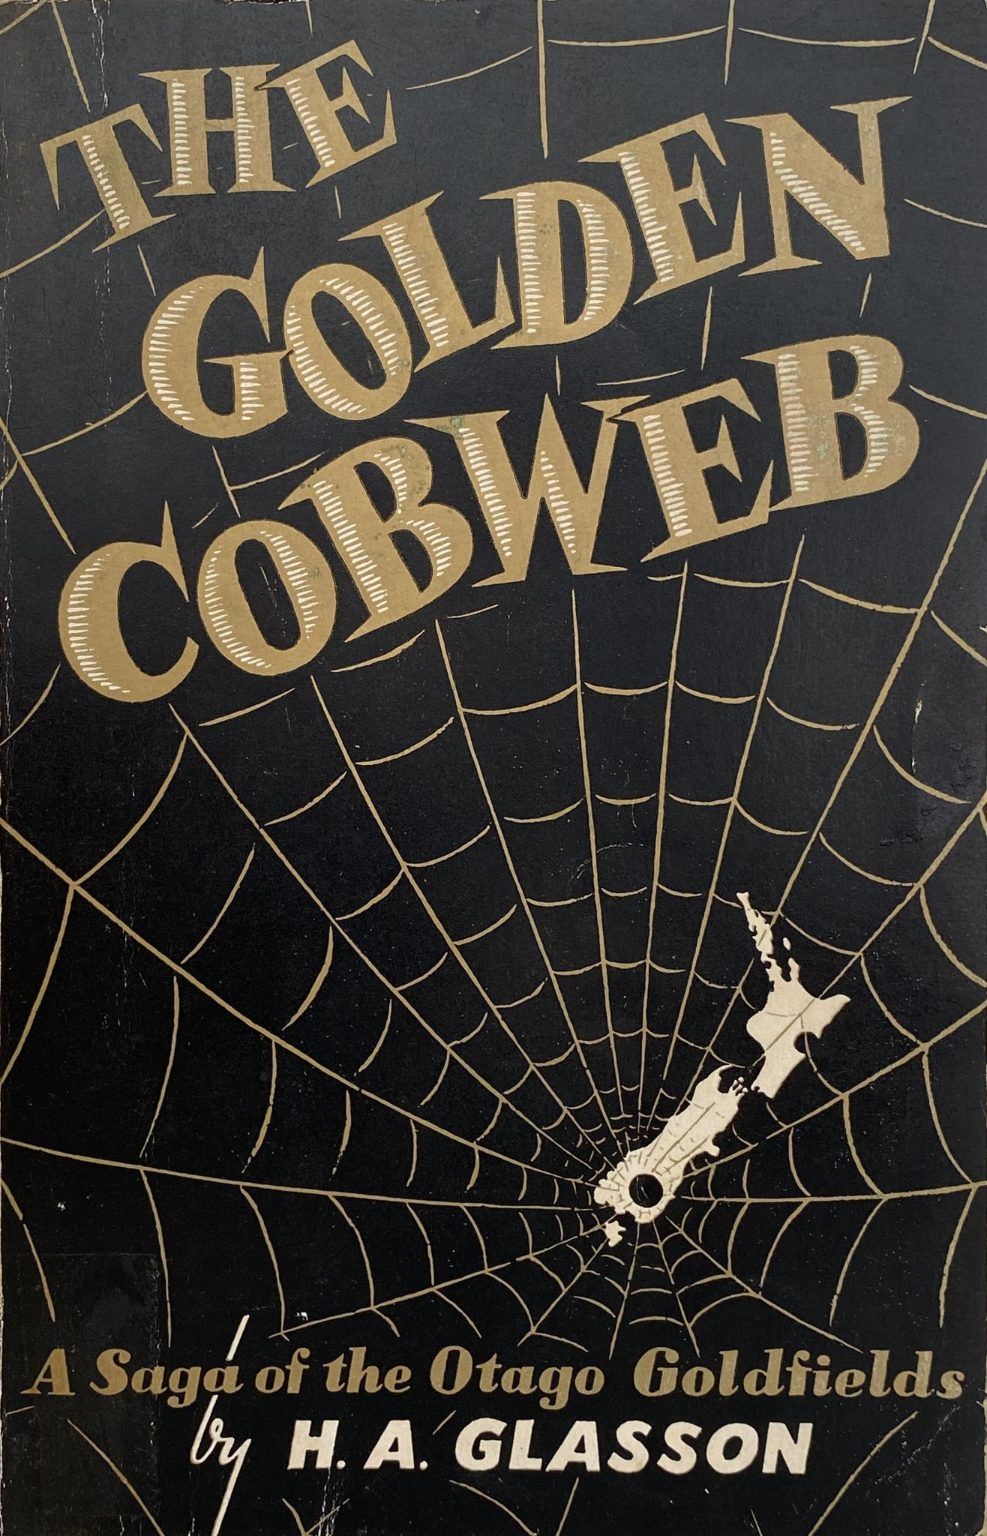 THE GOLDEN COBWEB: A saga of the Otago Goldfields 1861-64